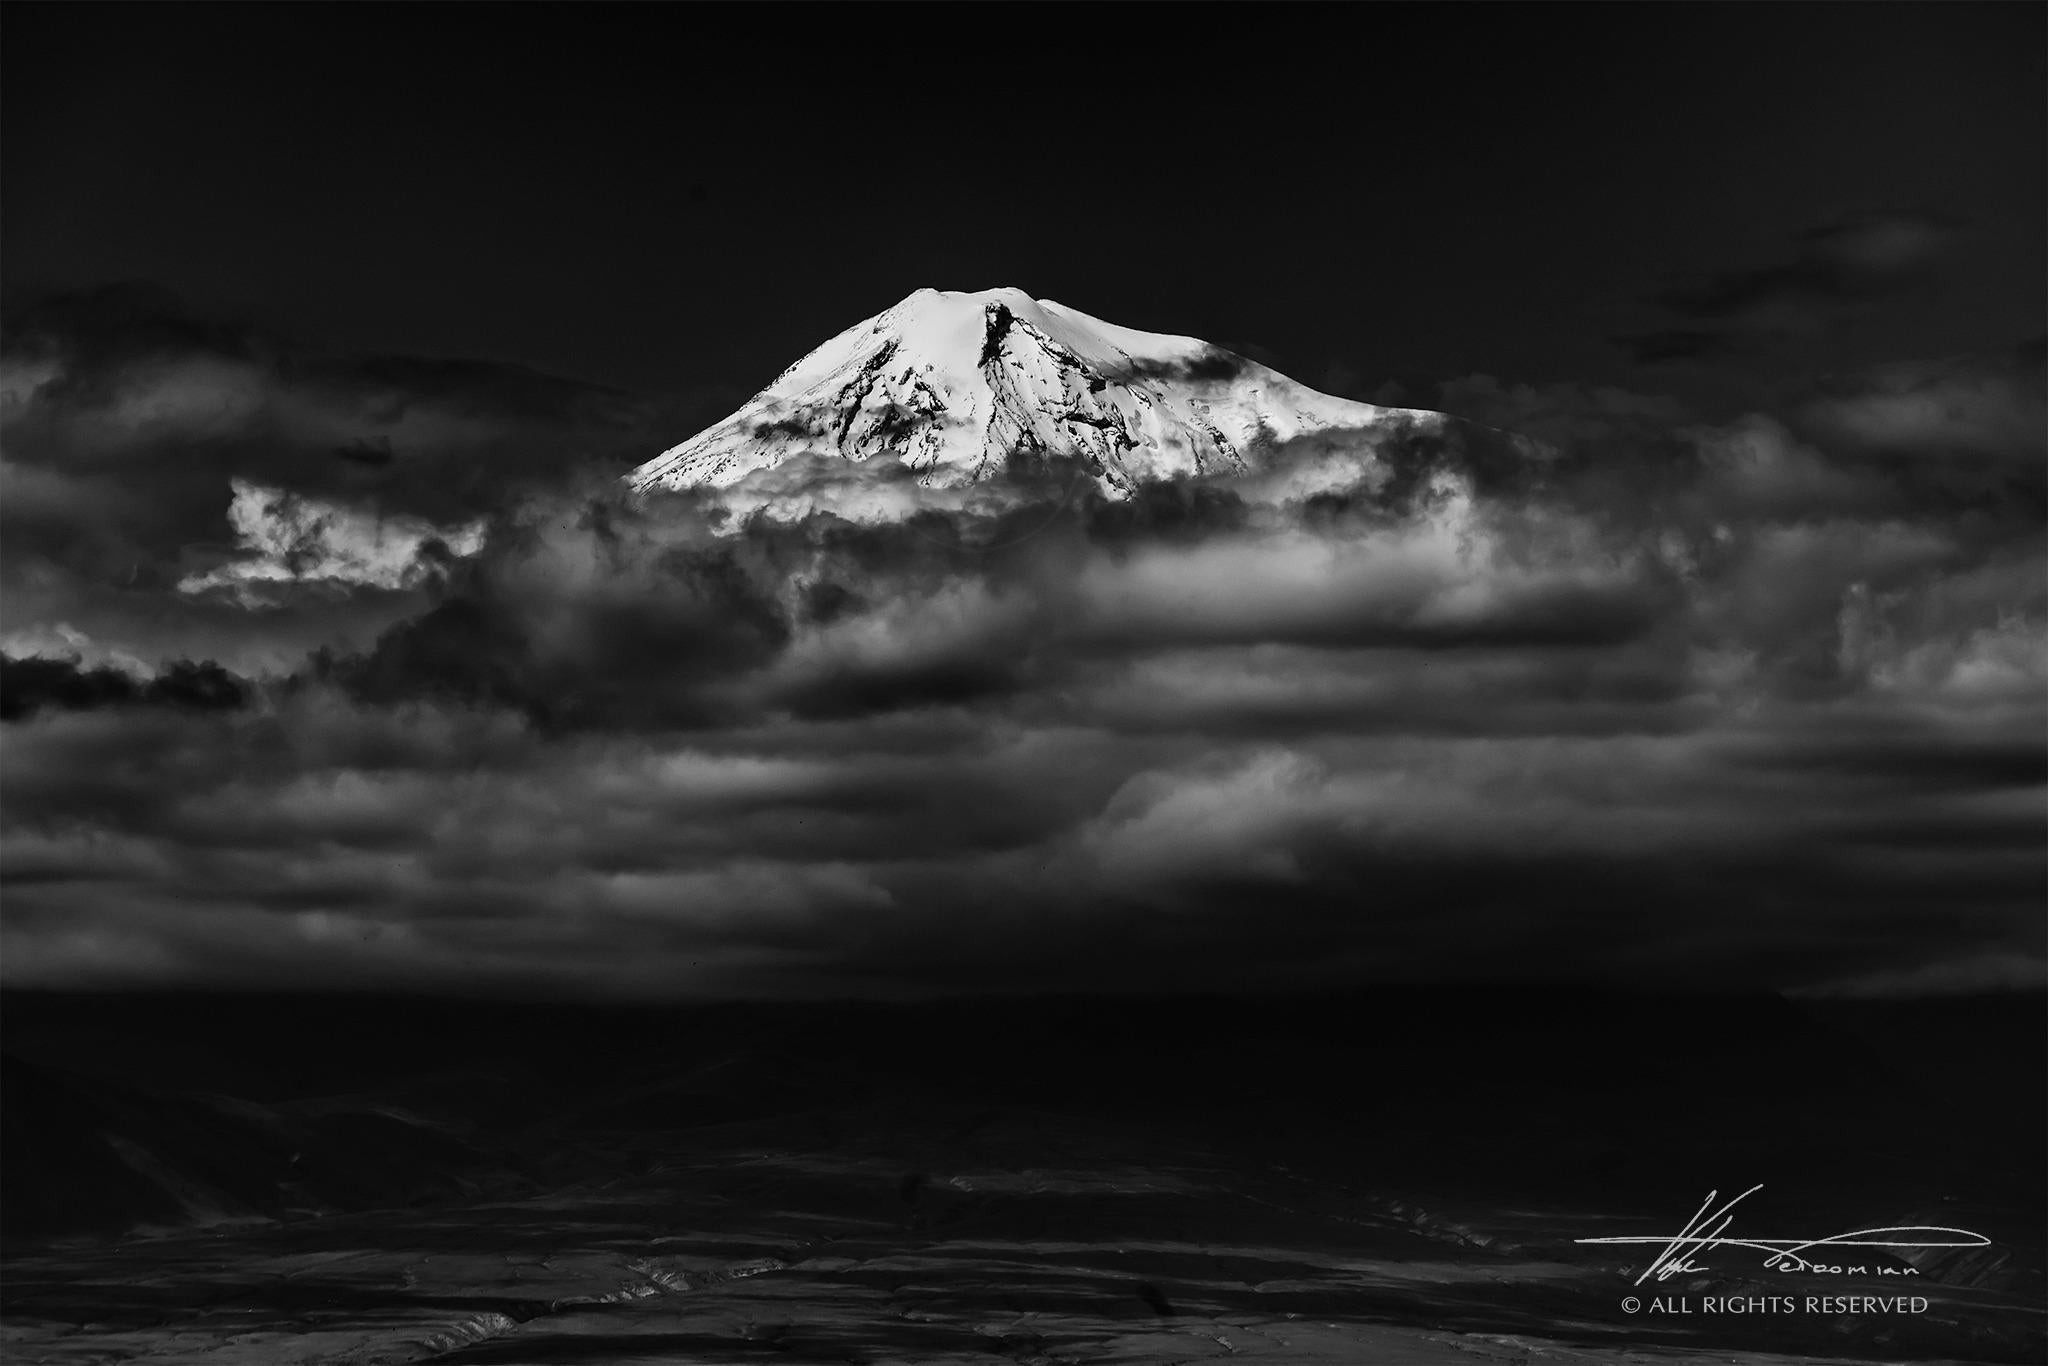 Vahé Peroomian Landscape Photograph - Contemporary Photograph, More Majestic than Everest, Armenia view.